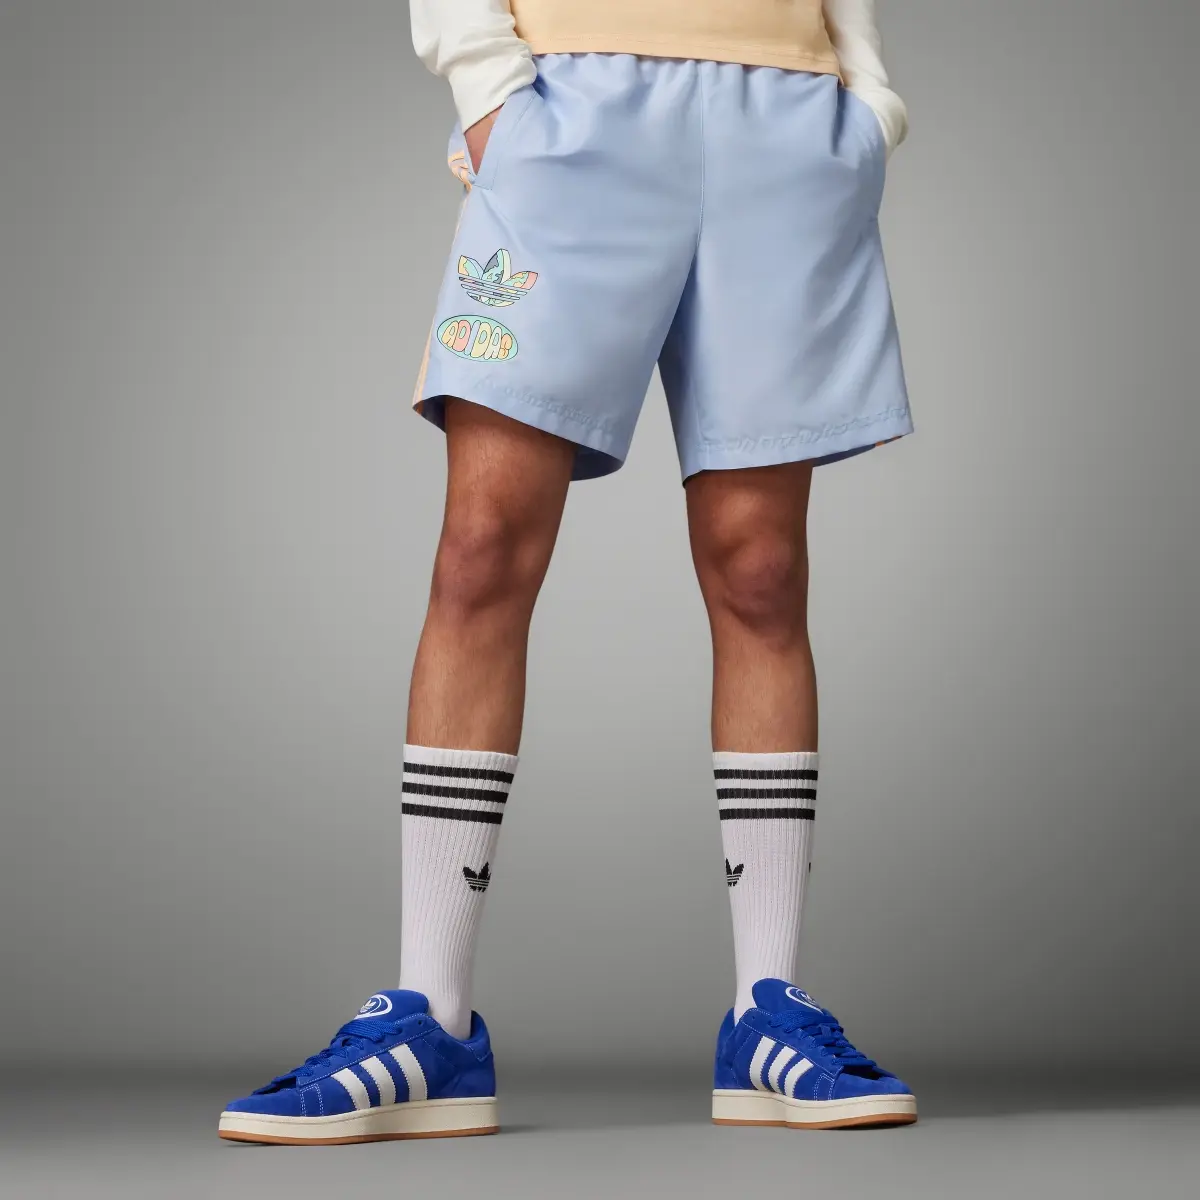 Adidas Enjoy Summer Shorts. 1